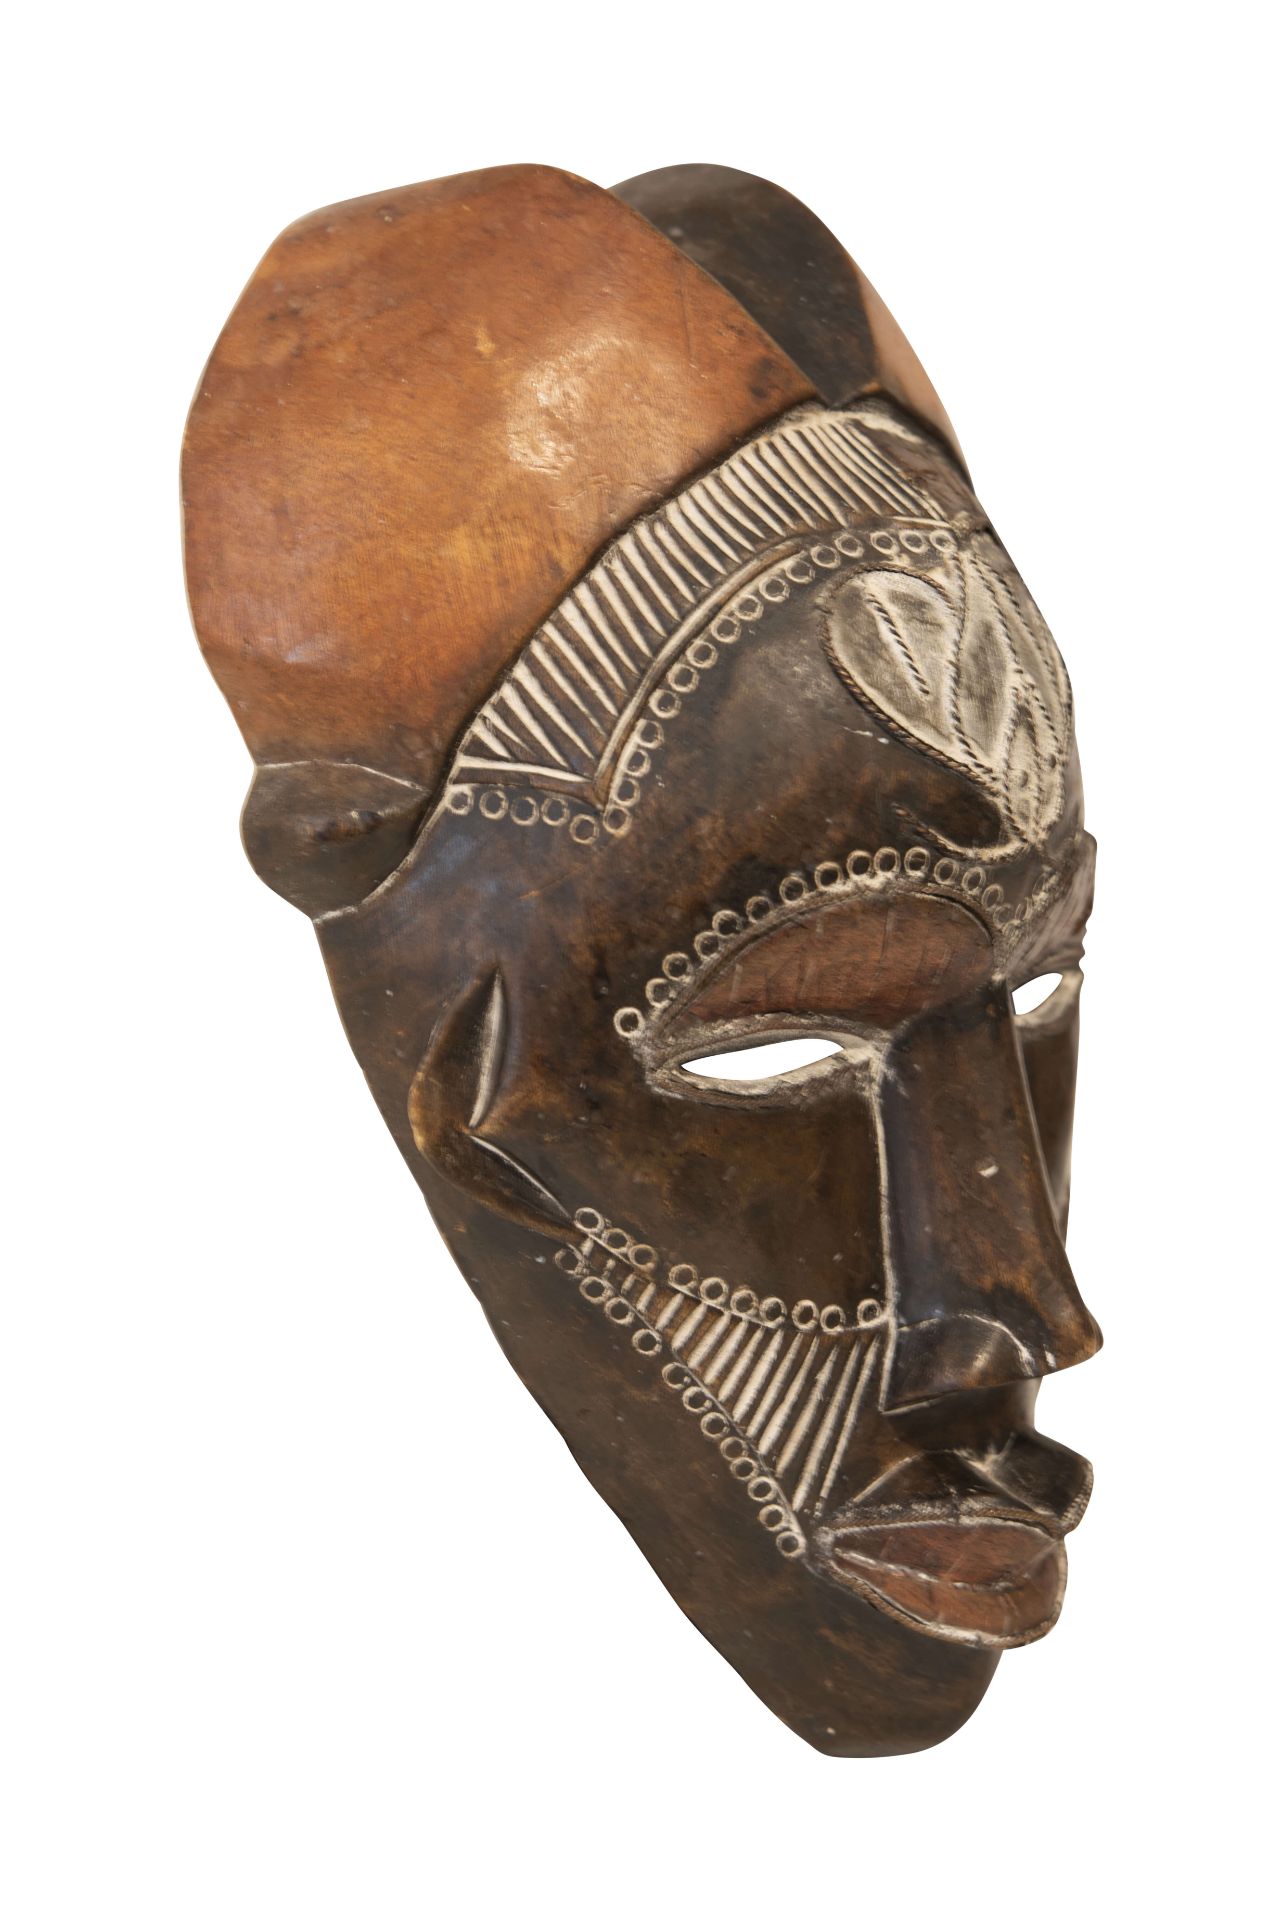 Afrikanische Holzmaske | African Mask Made of Wood - Image 3 of 5